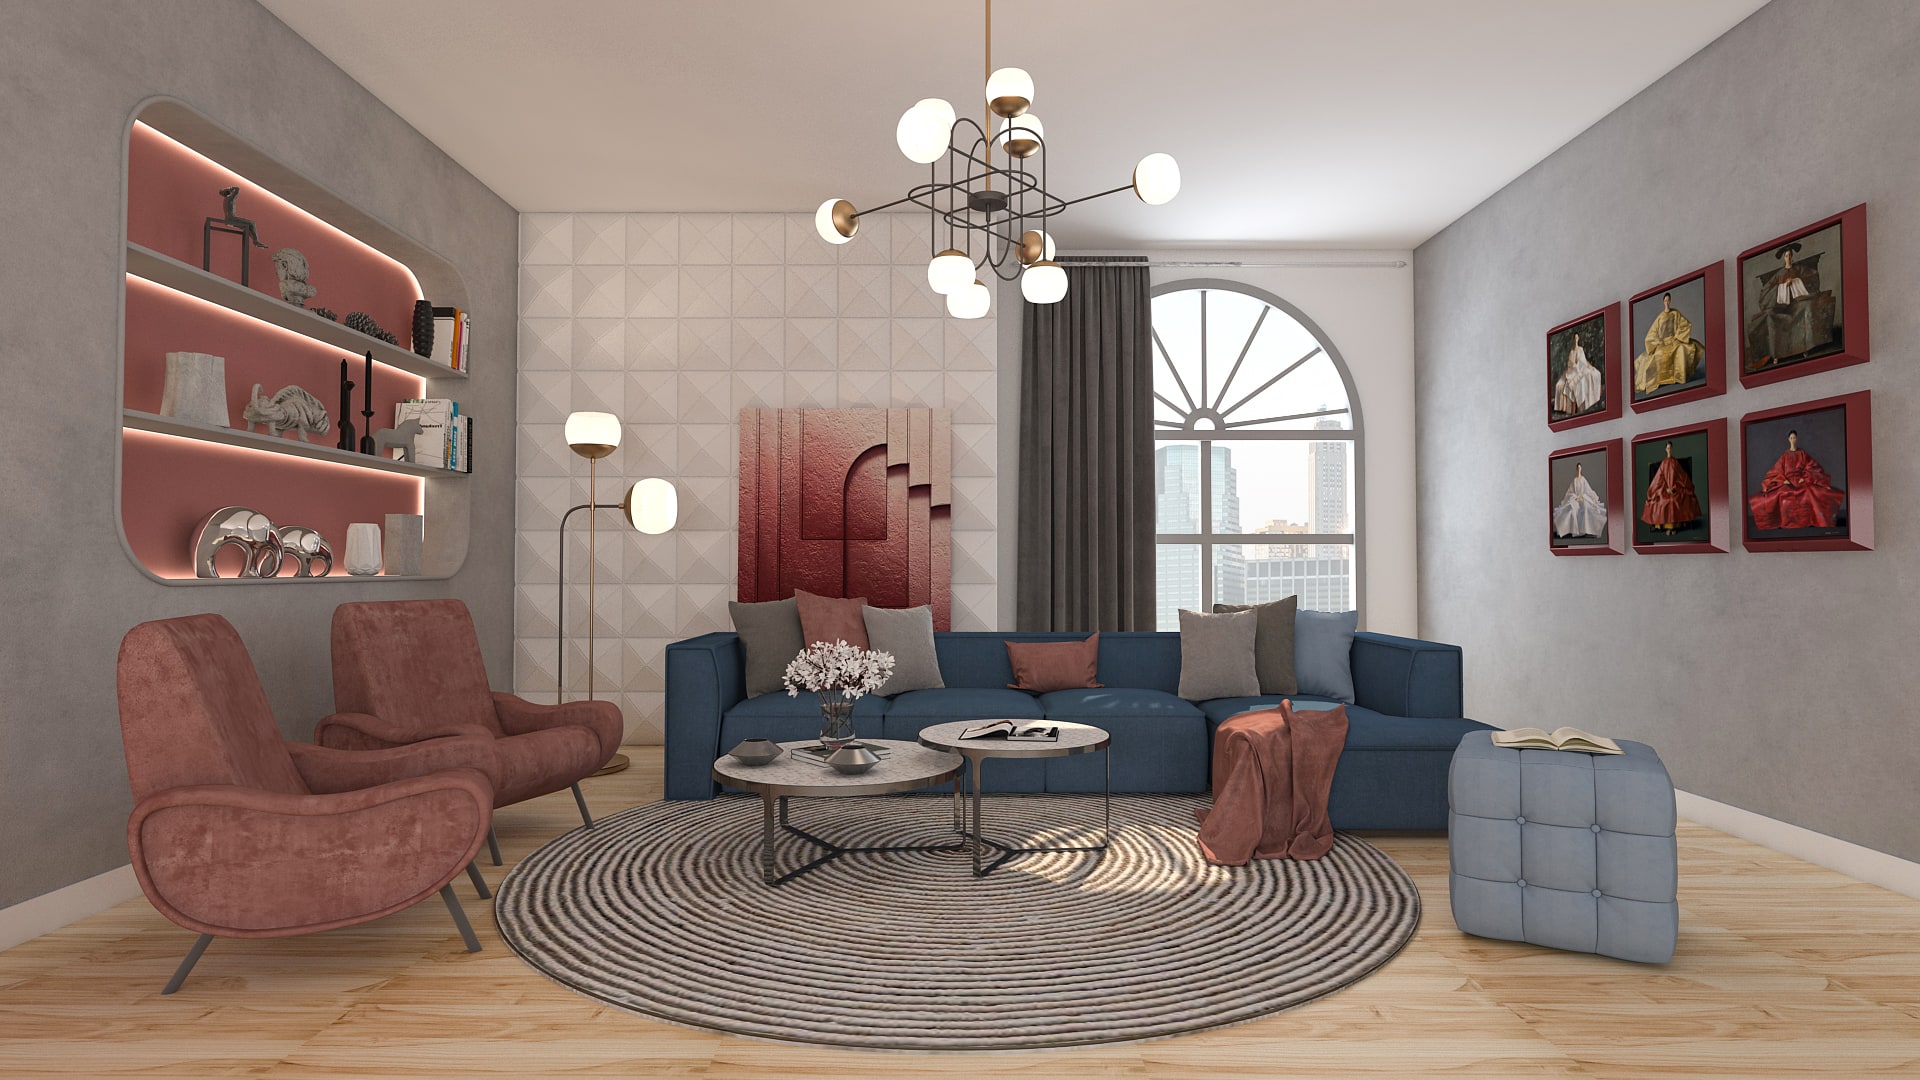 Mid-century modern decor geometry amd jewel tones in a living room by Homilo